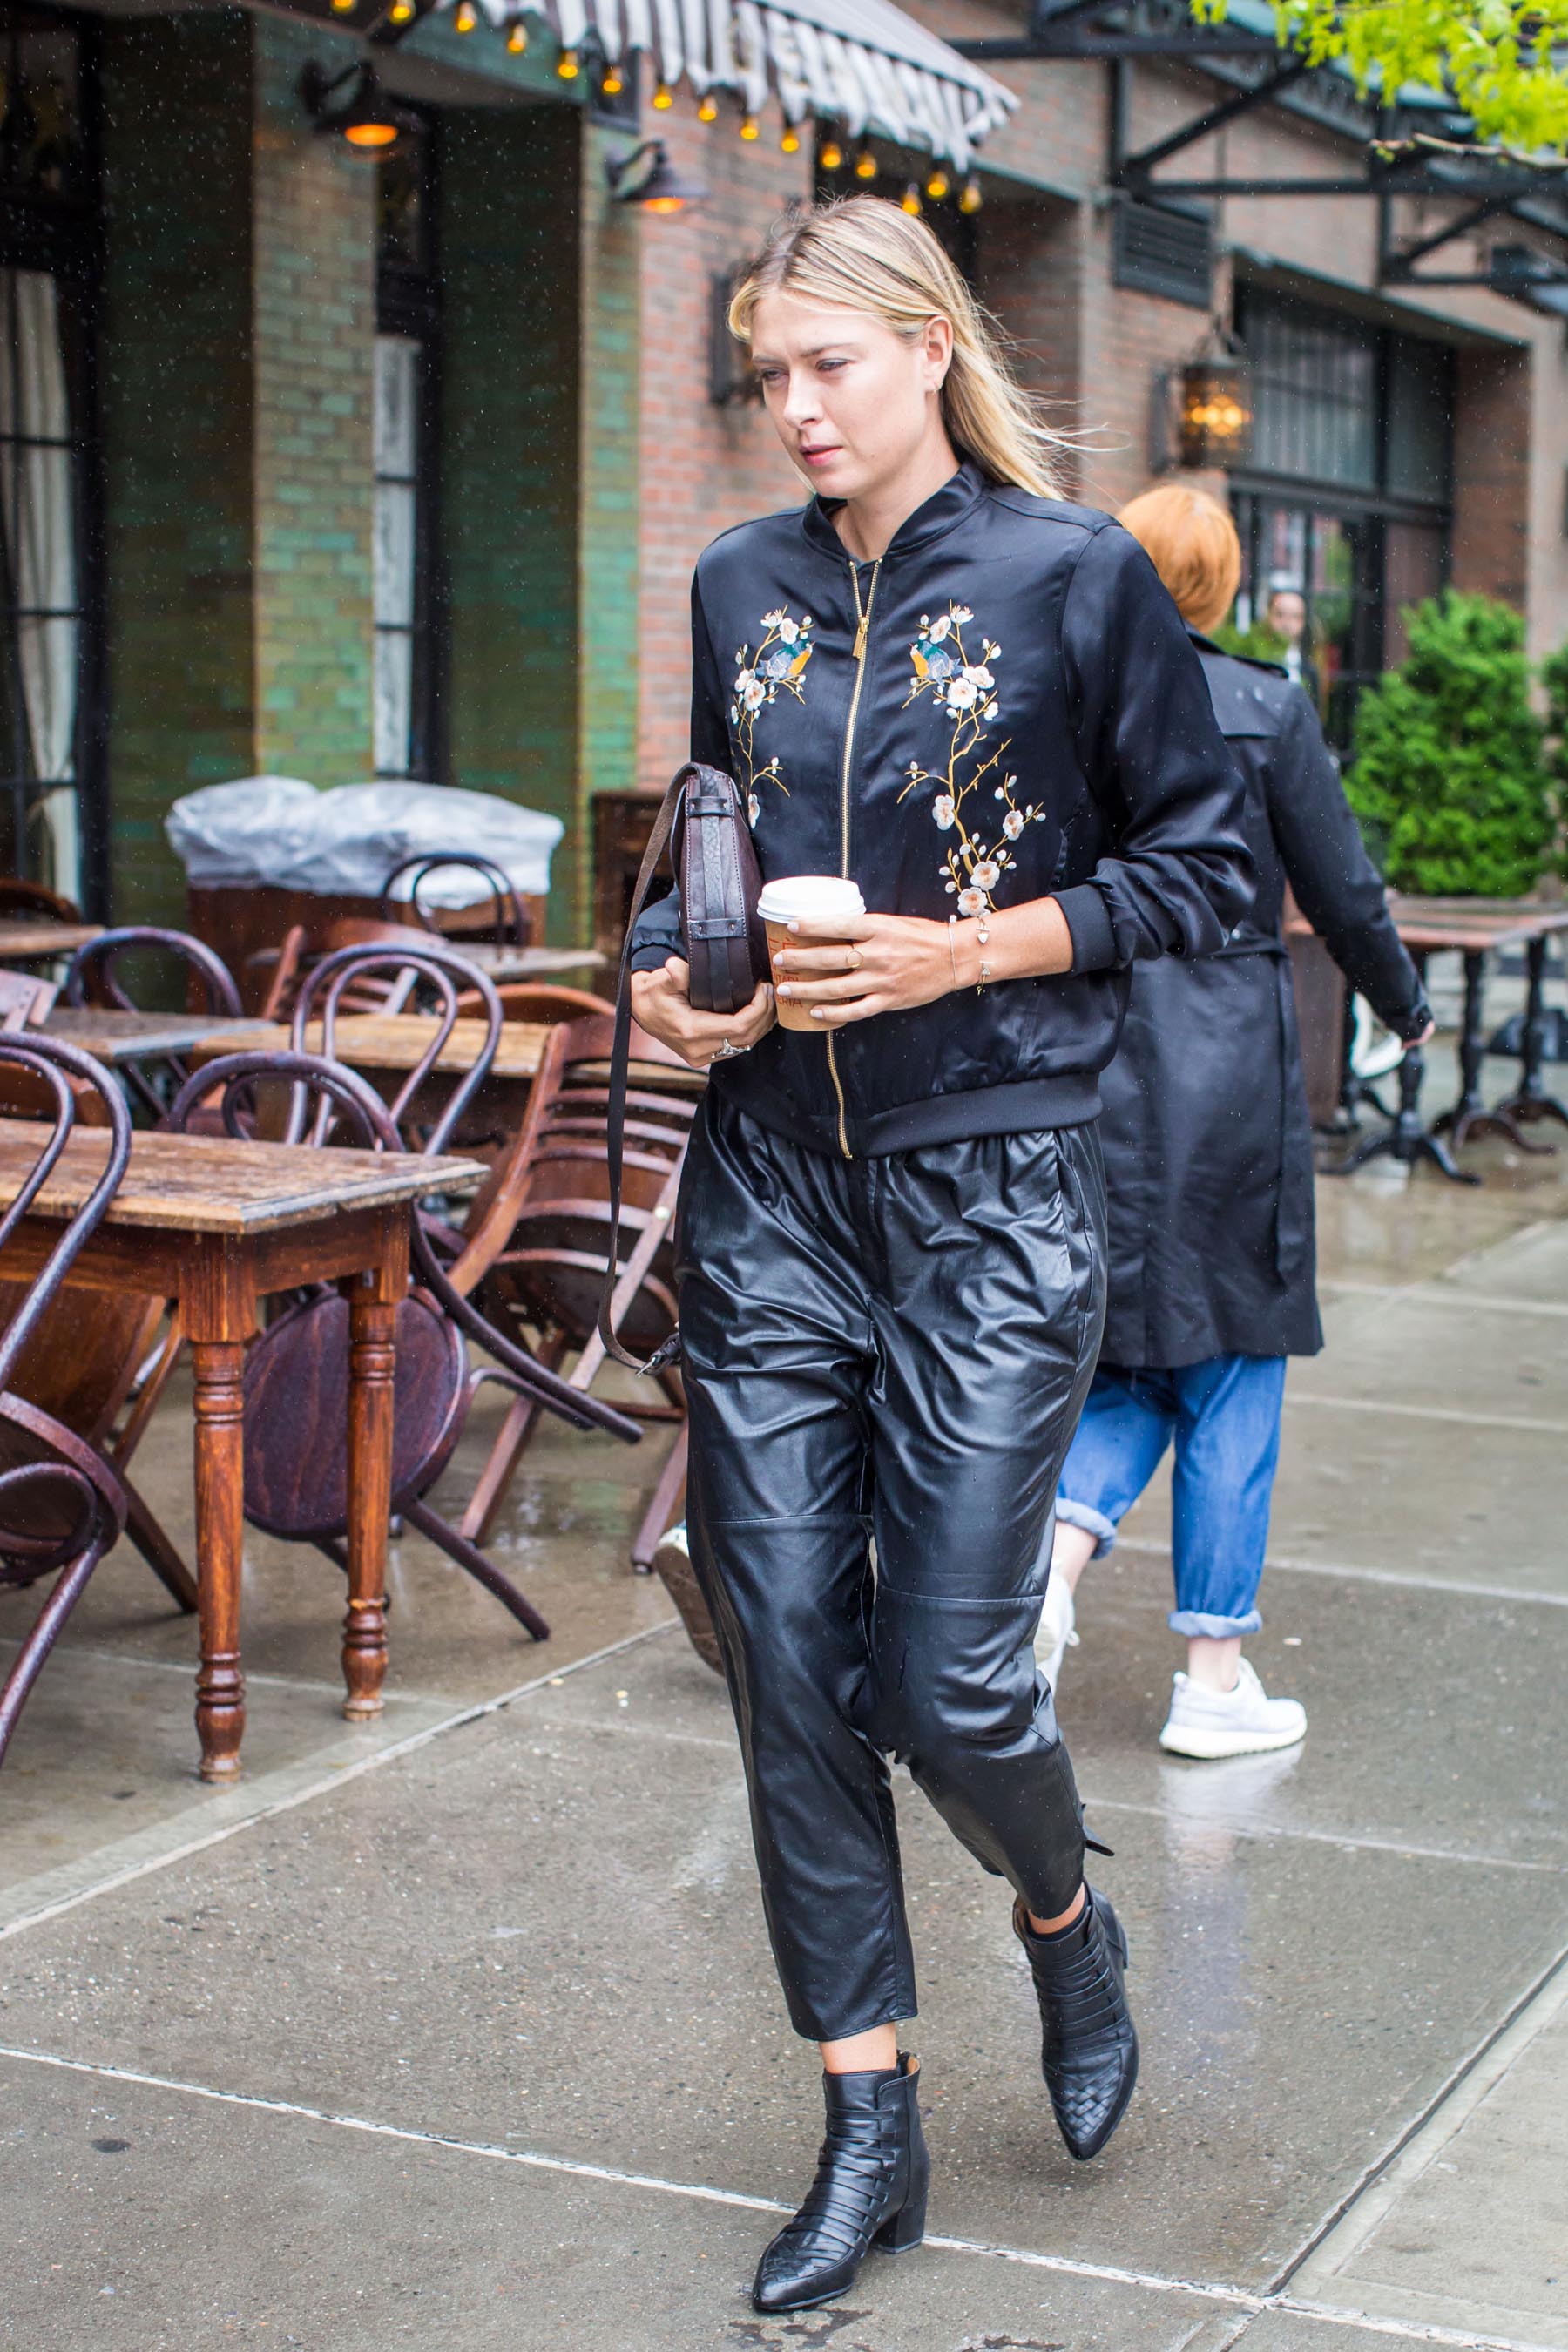 Maria Sharapova leaves Her Hotel in NYC